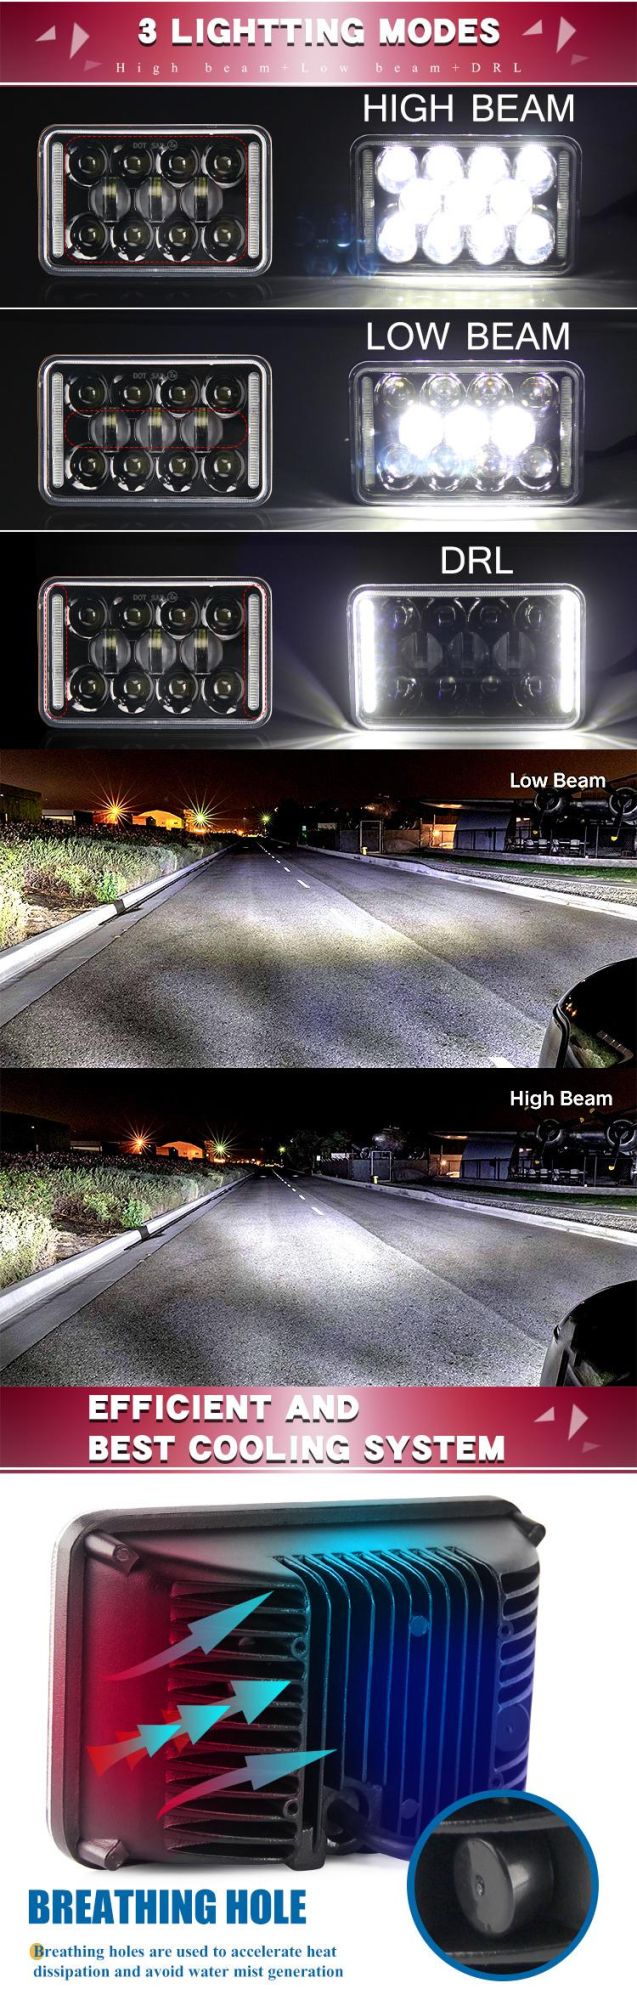 Car Accessories Vehicle Head Light 4X6 Inch LED Auto Square LED Truck Headlight